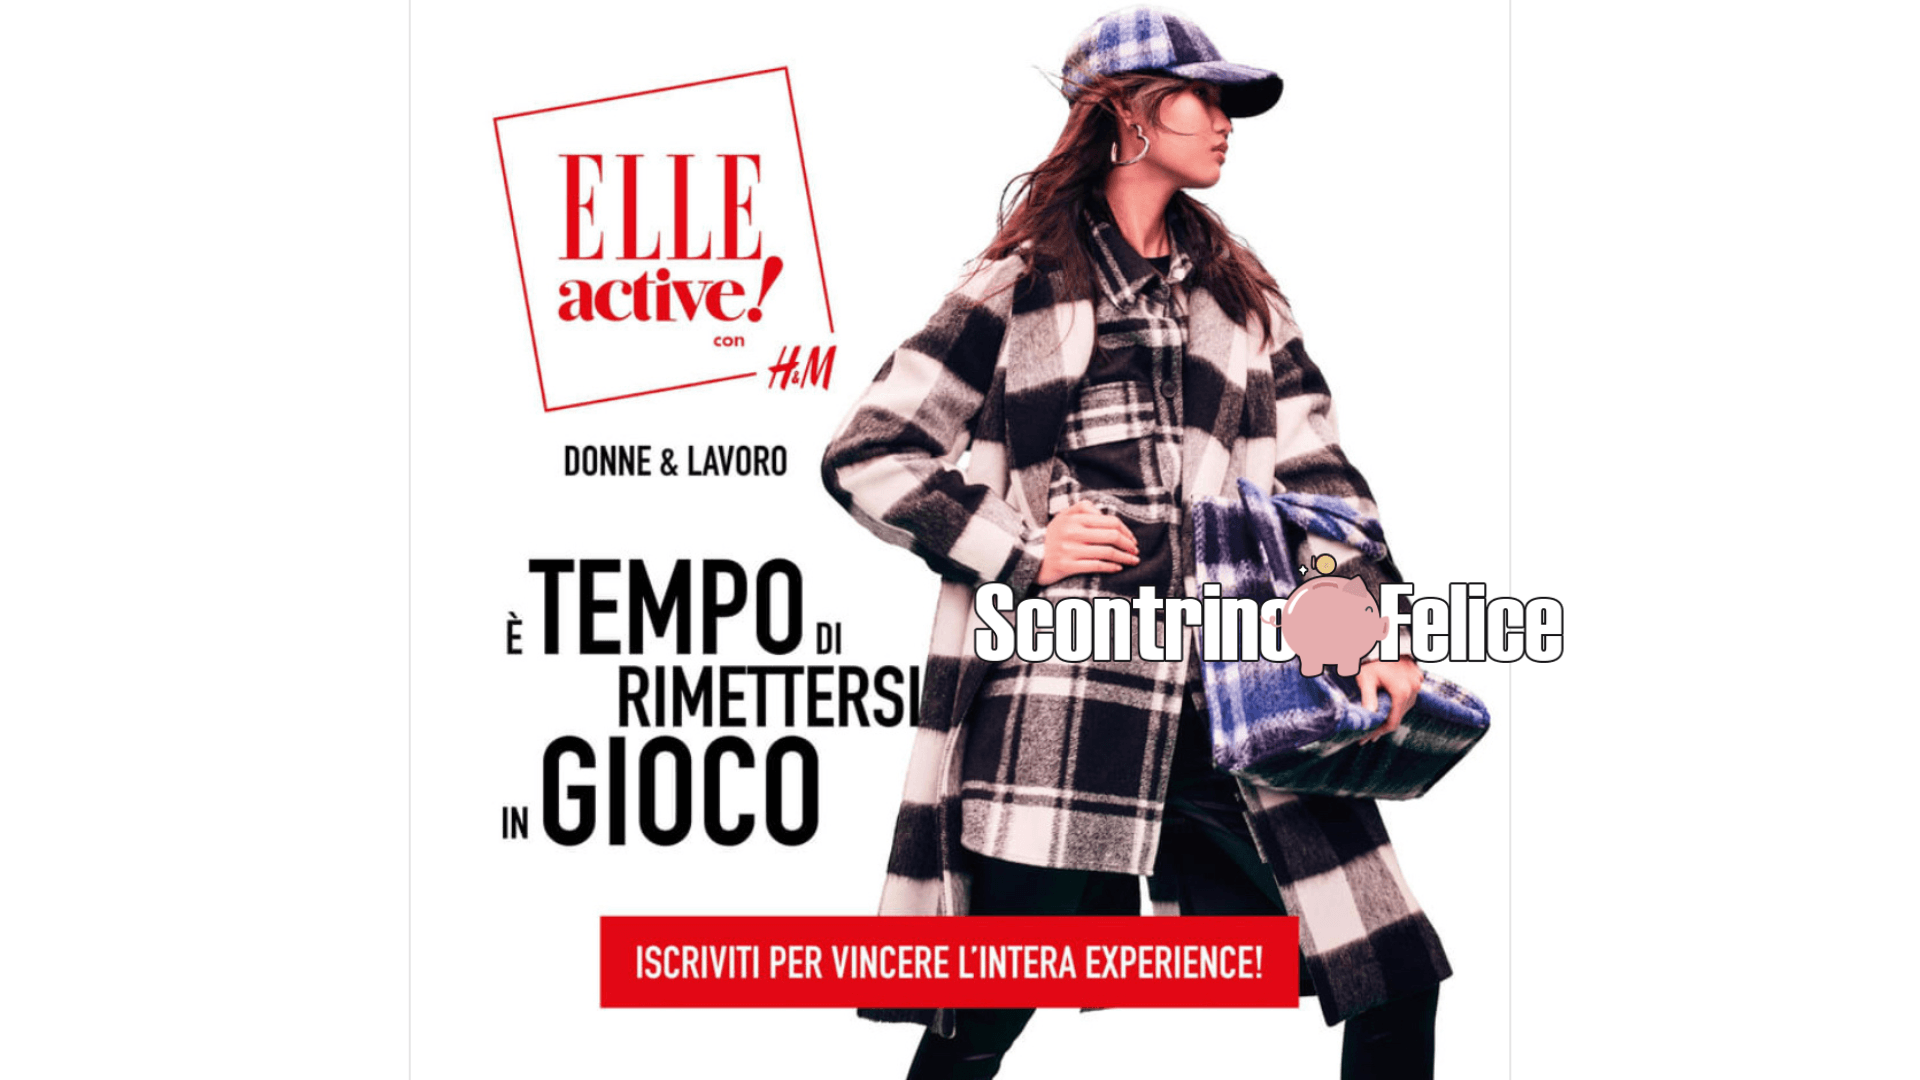 Vinci un weekend per 2 persone a Milano per partecipare a Elle active 4